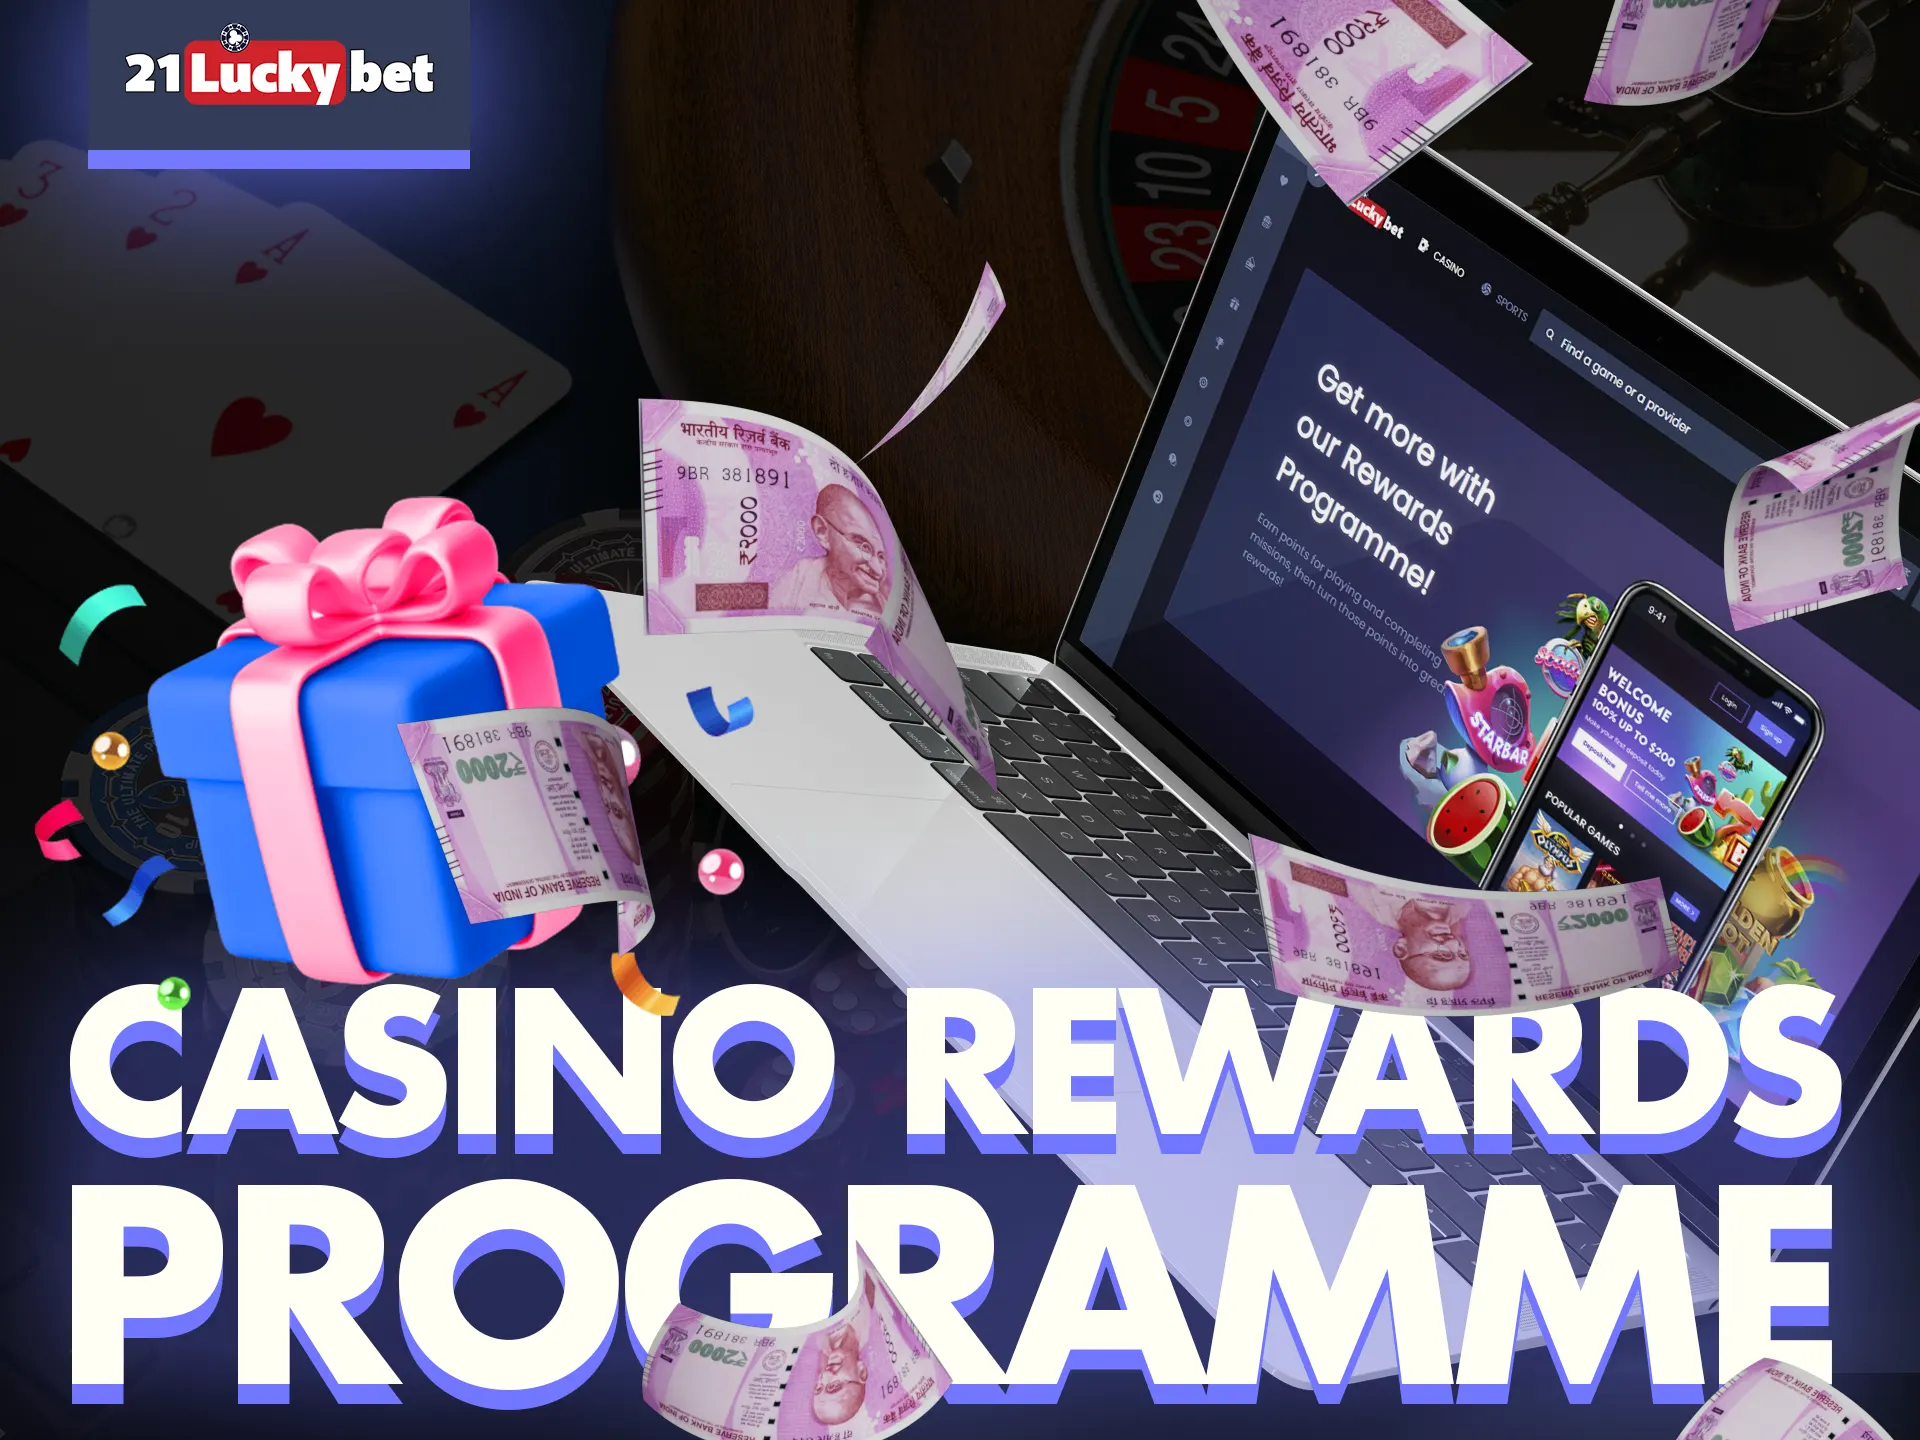 At 21luckybet, take part at casino rewards programme.